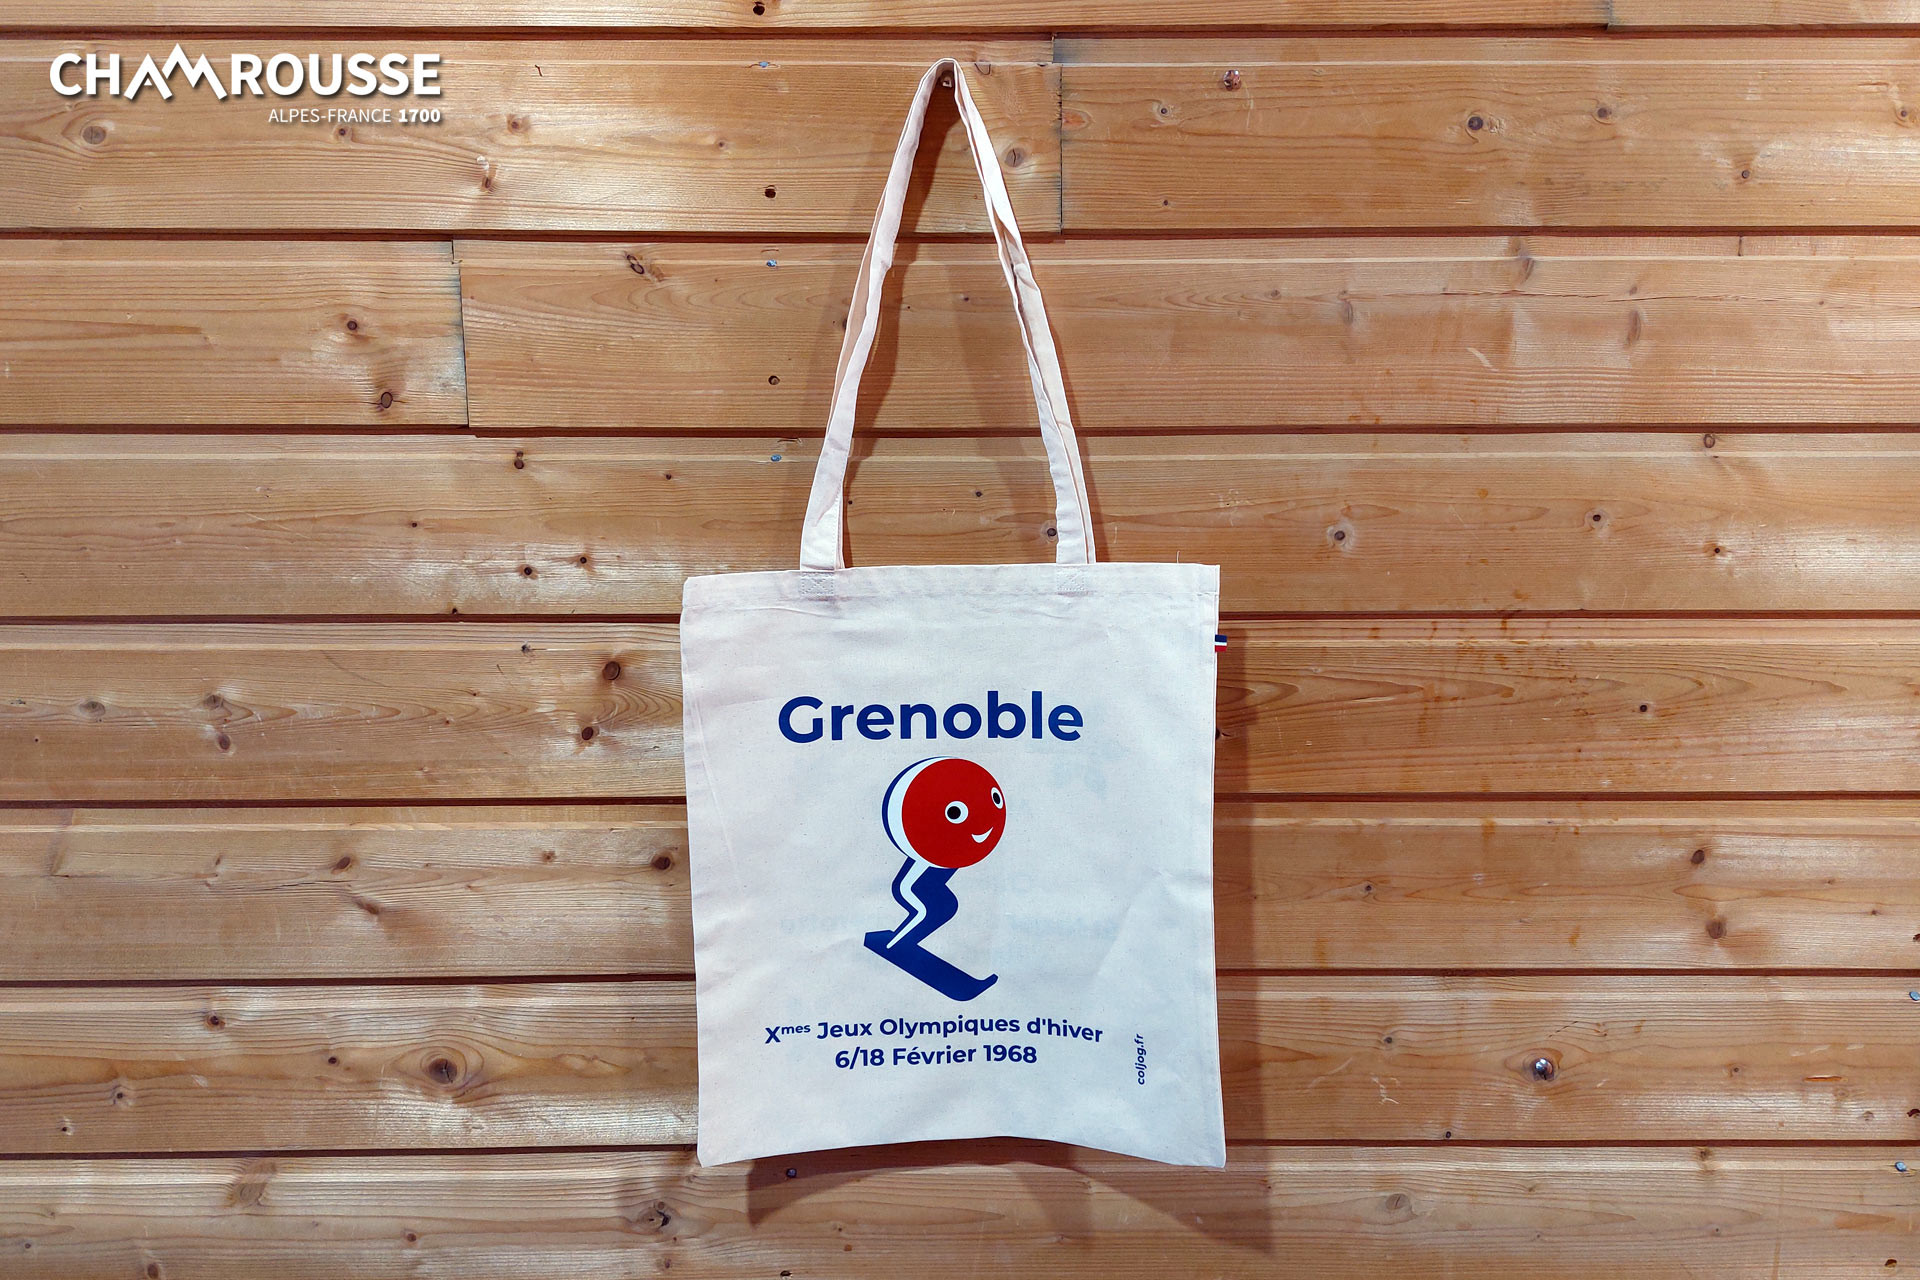 Chamrousse bag fabric tote-bag mascot schuss olympic games olympics 1968 coljog shop souvenir gift ski resort mountain grenoble isere french alps france